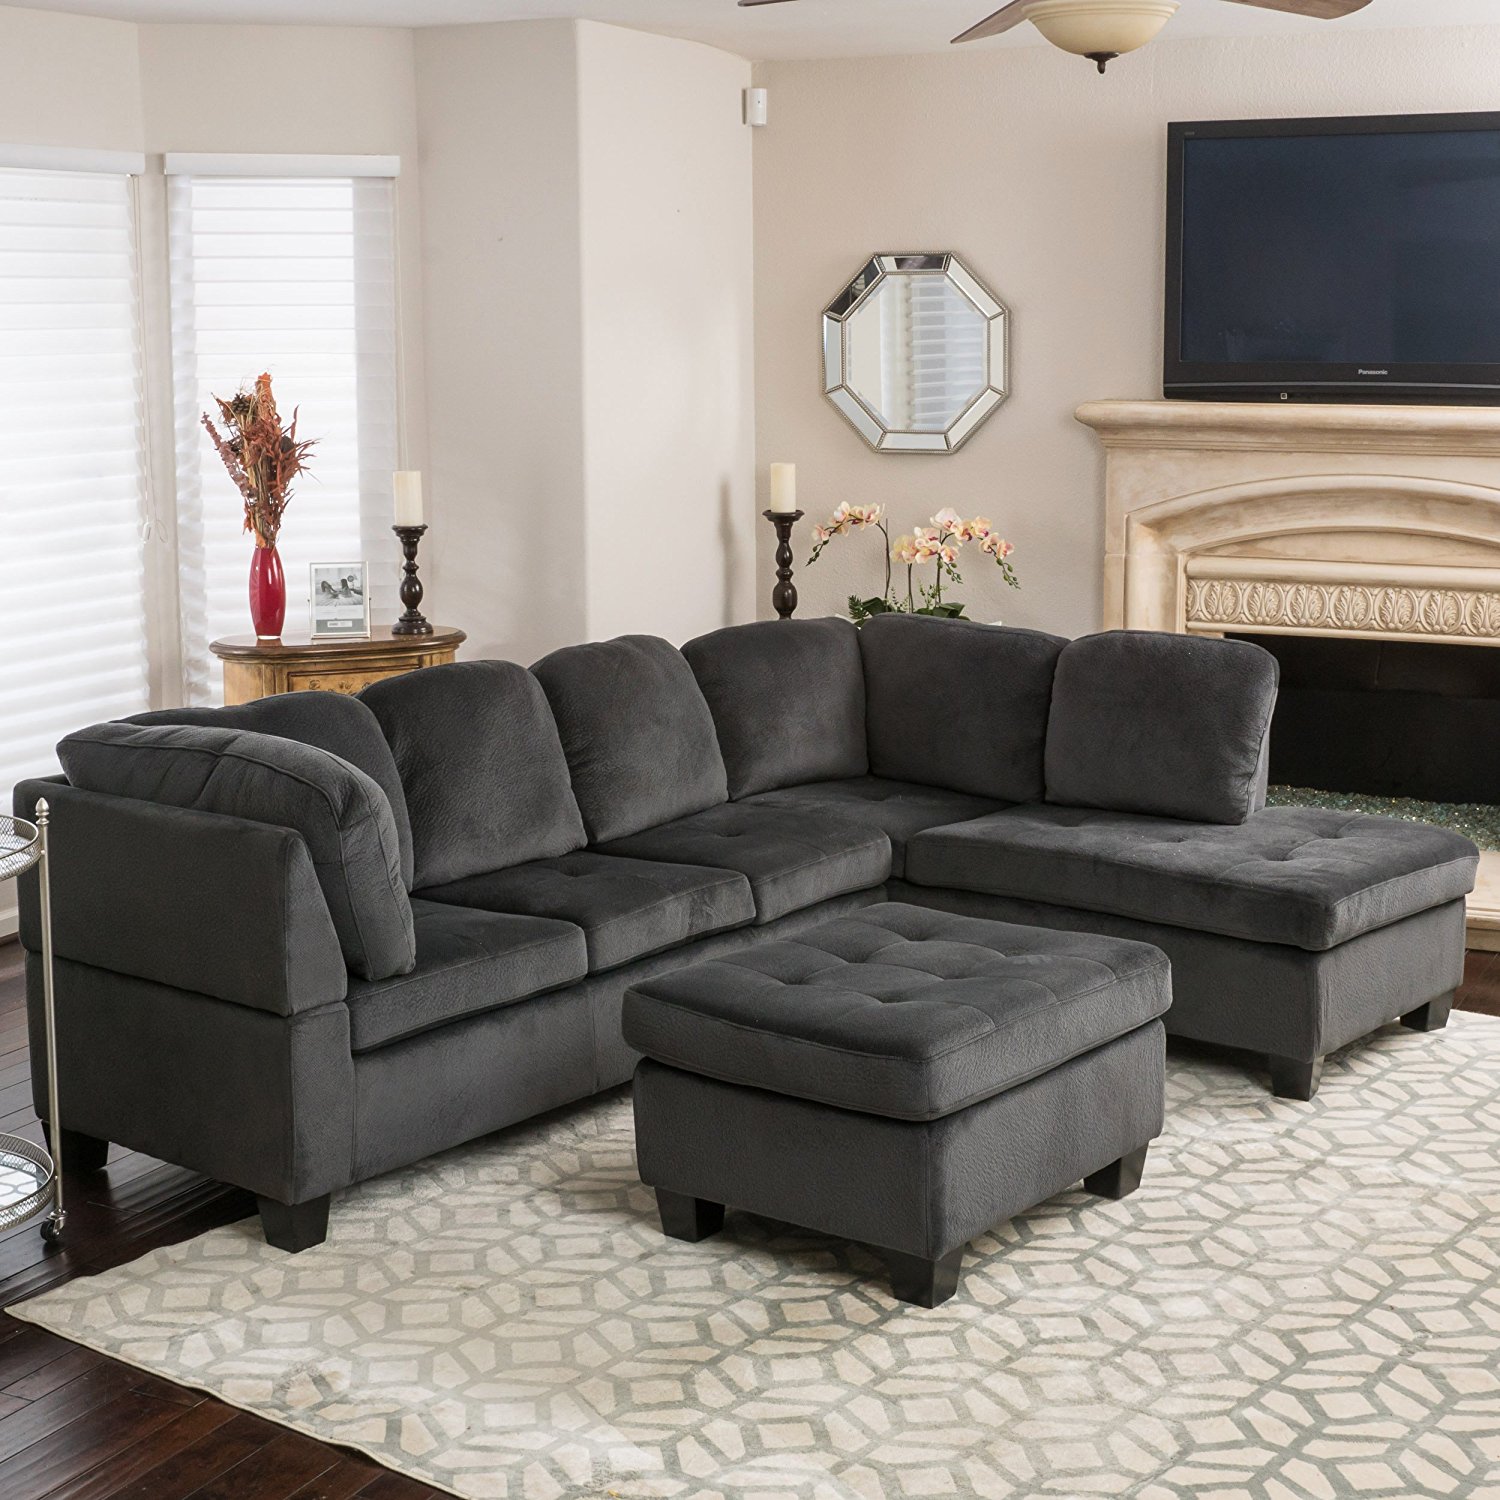 Gotham 3-piece Charcoal Fabric Sectional Sofa Set